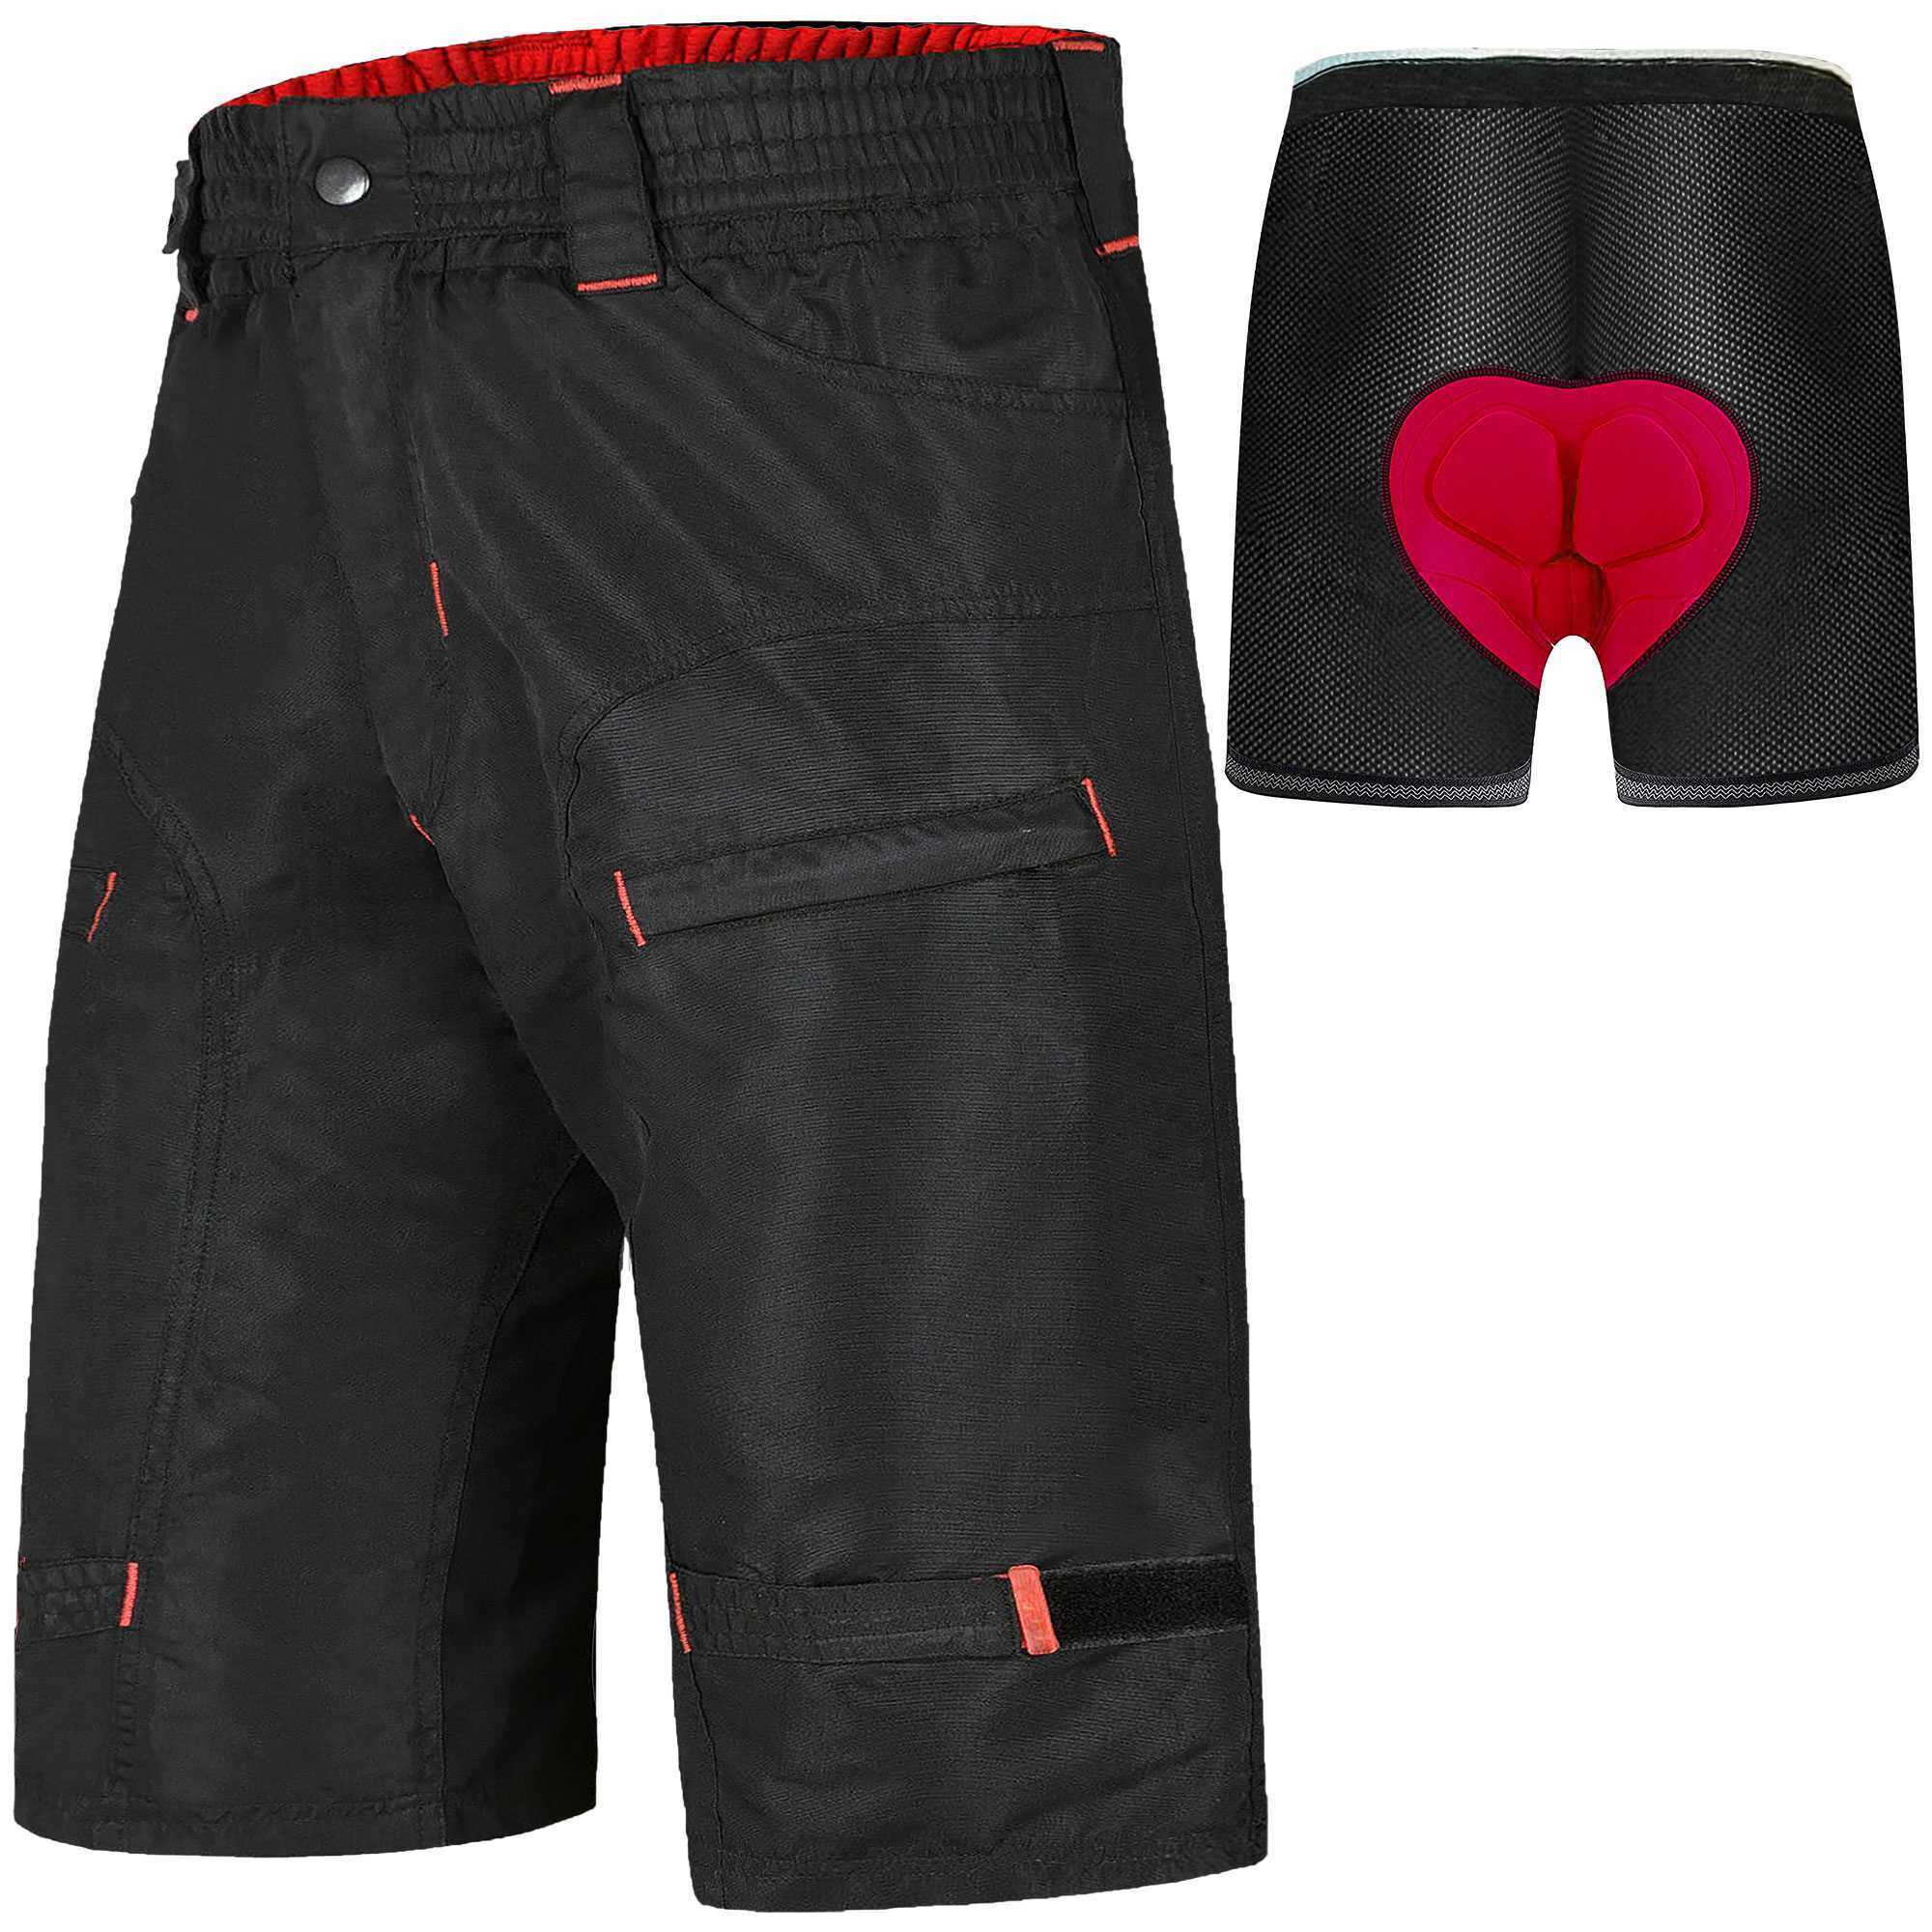 Generic Men's Cycling Riding Padded Shorts Bicycle Wear Bike Pants Tights  S-XXL Black